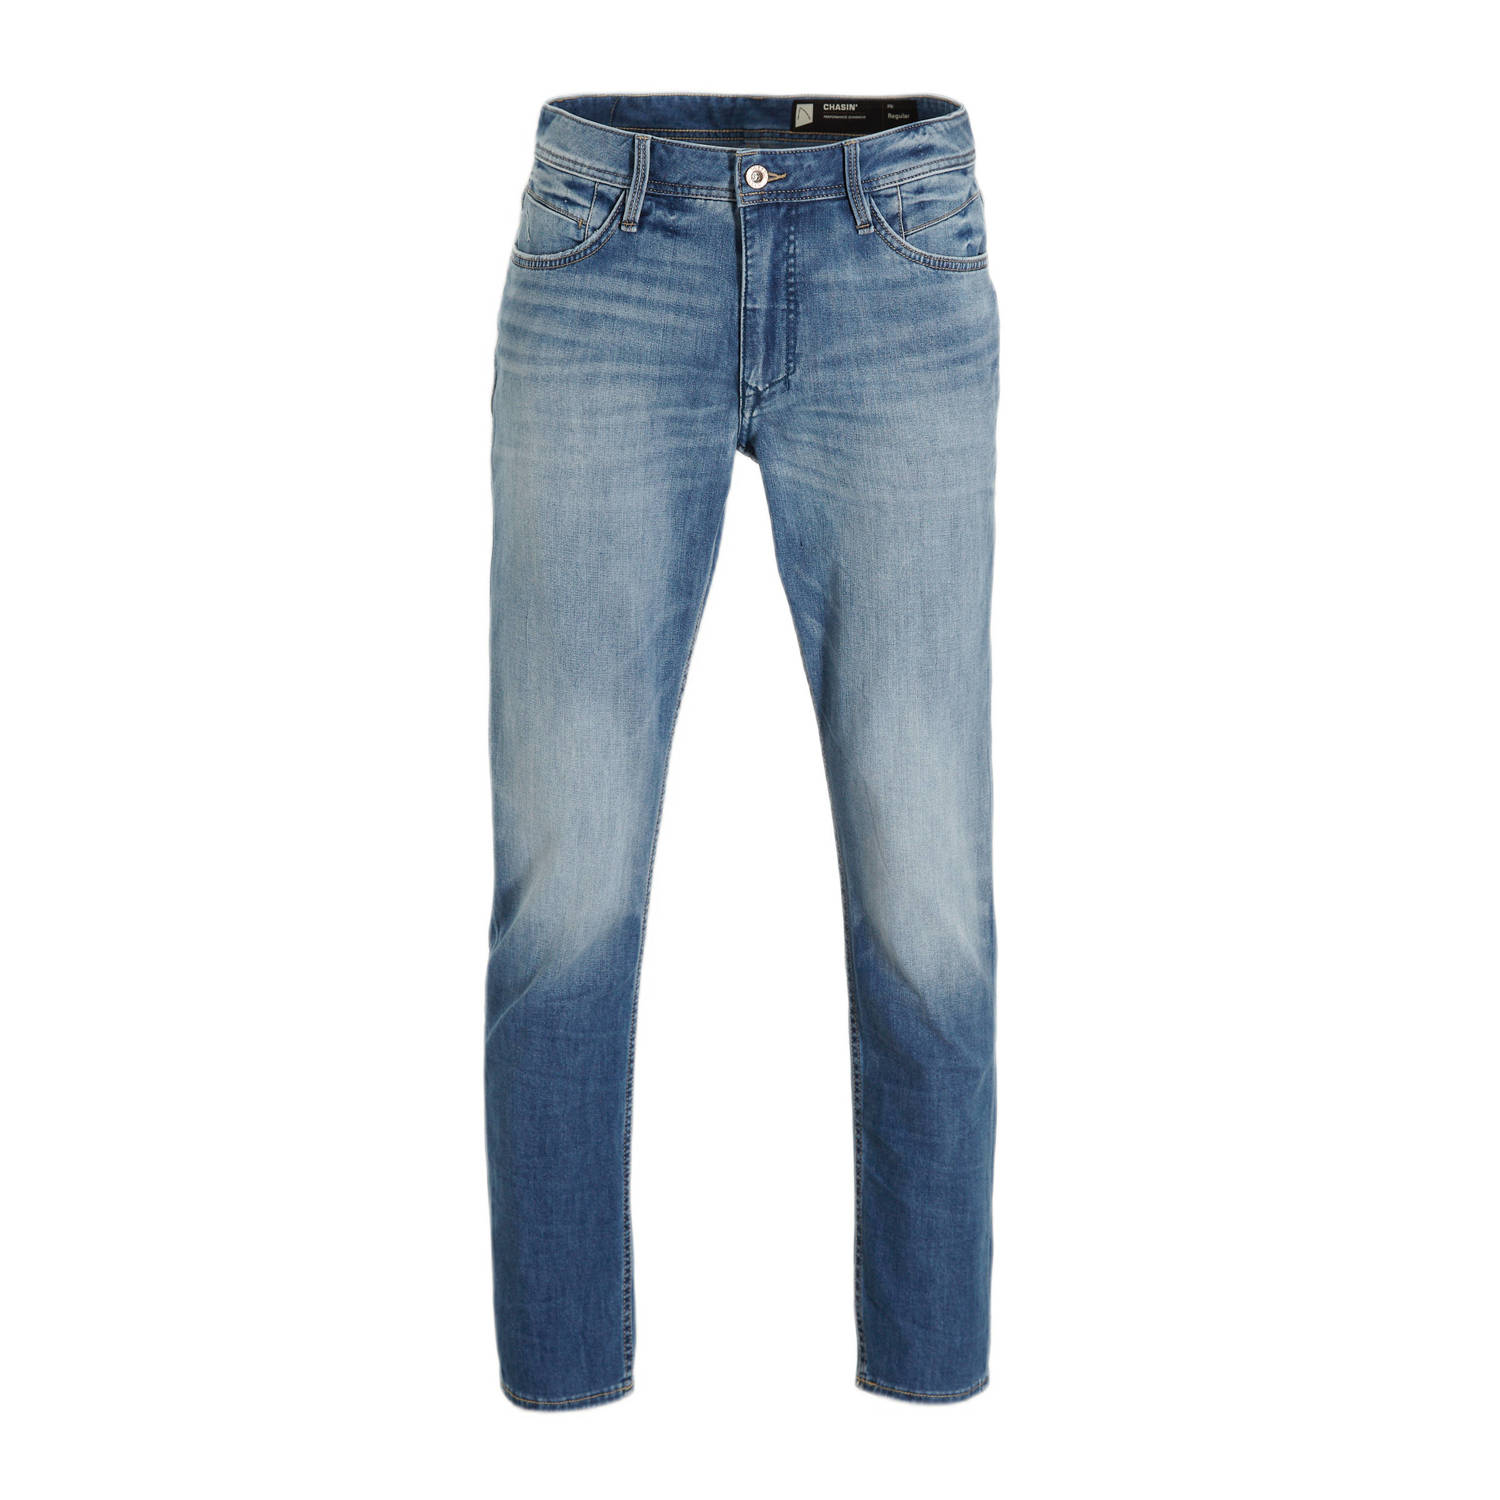 CHASIN' regular fit jeans Iron Arid mid blue denim